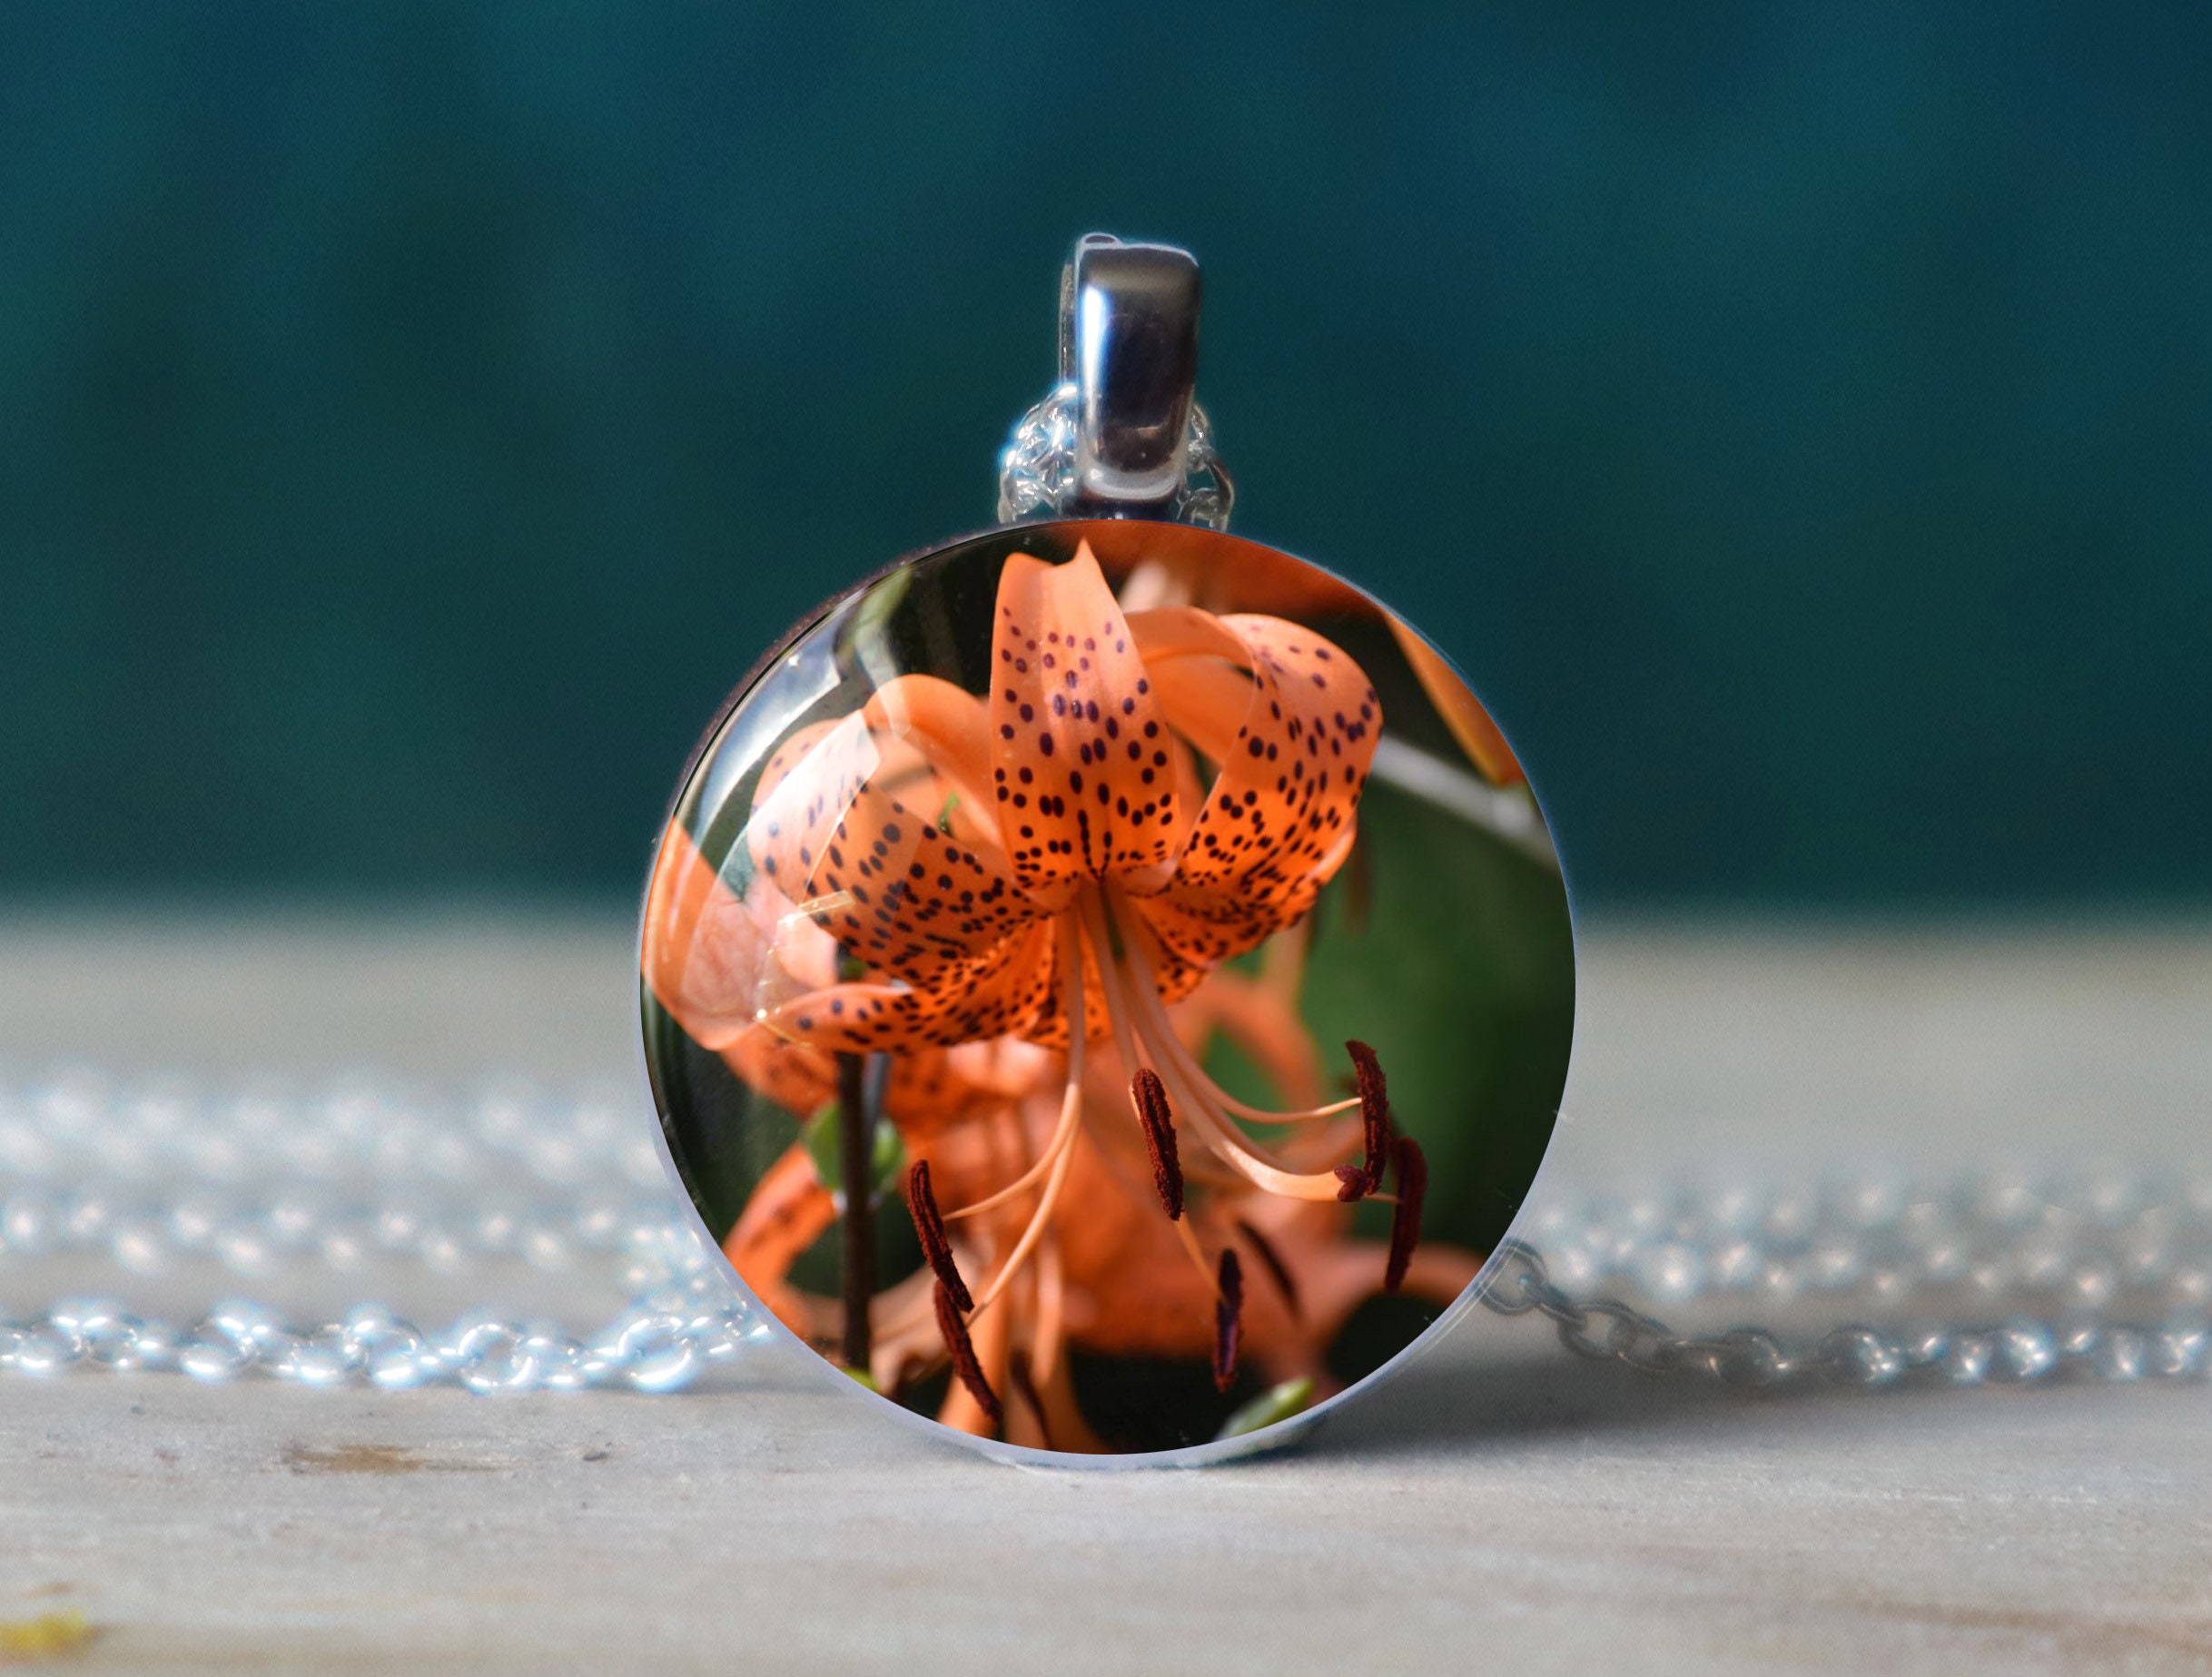 Lily flower necklace, 14k gold unique personalized pendant, engraved f –  Lily & Dahlia